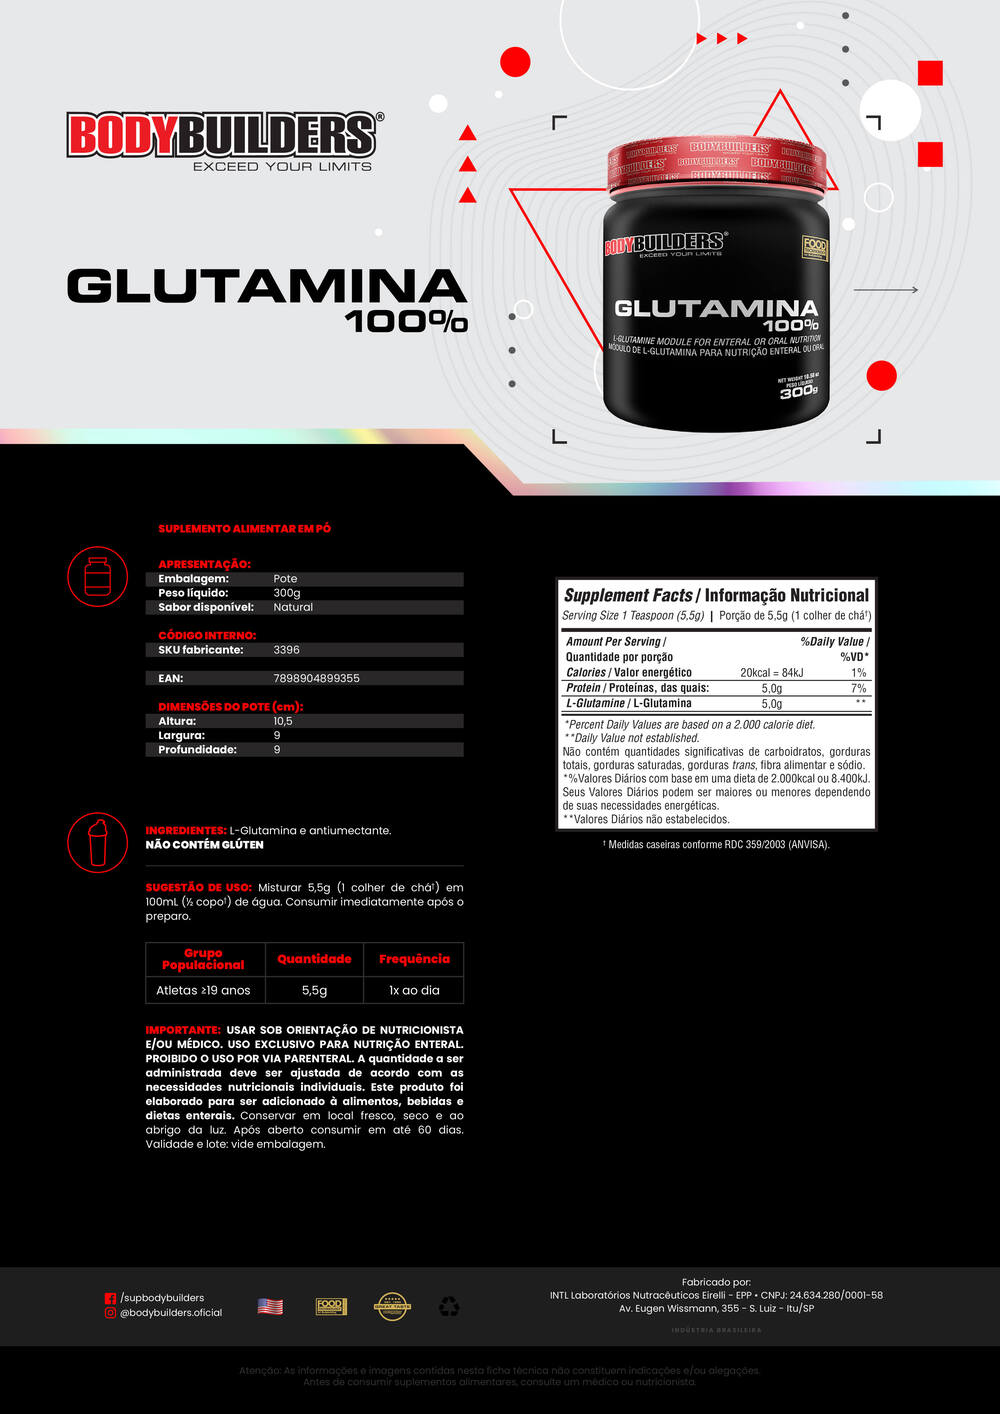 Kit Whey Isolada 2kg + Glutamina 300g + BCAA 250g + Coqueteleira - Bodybuilders